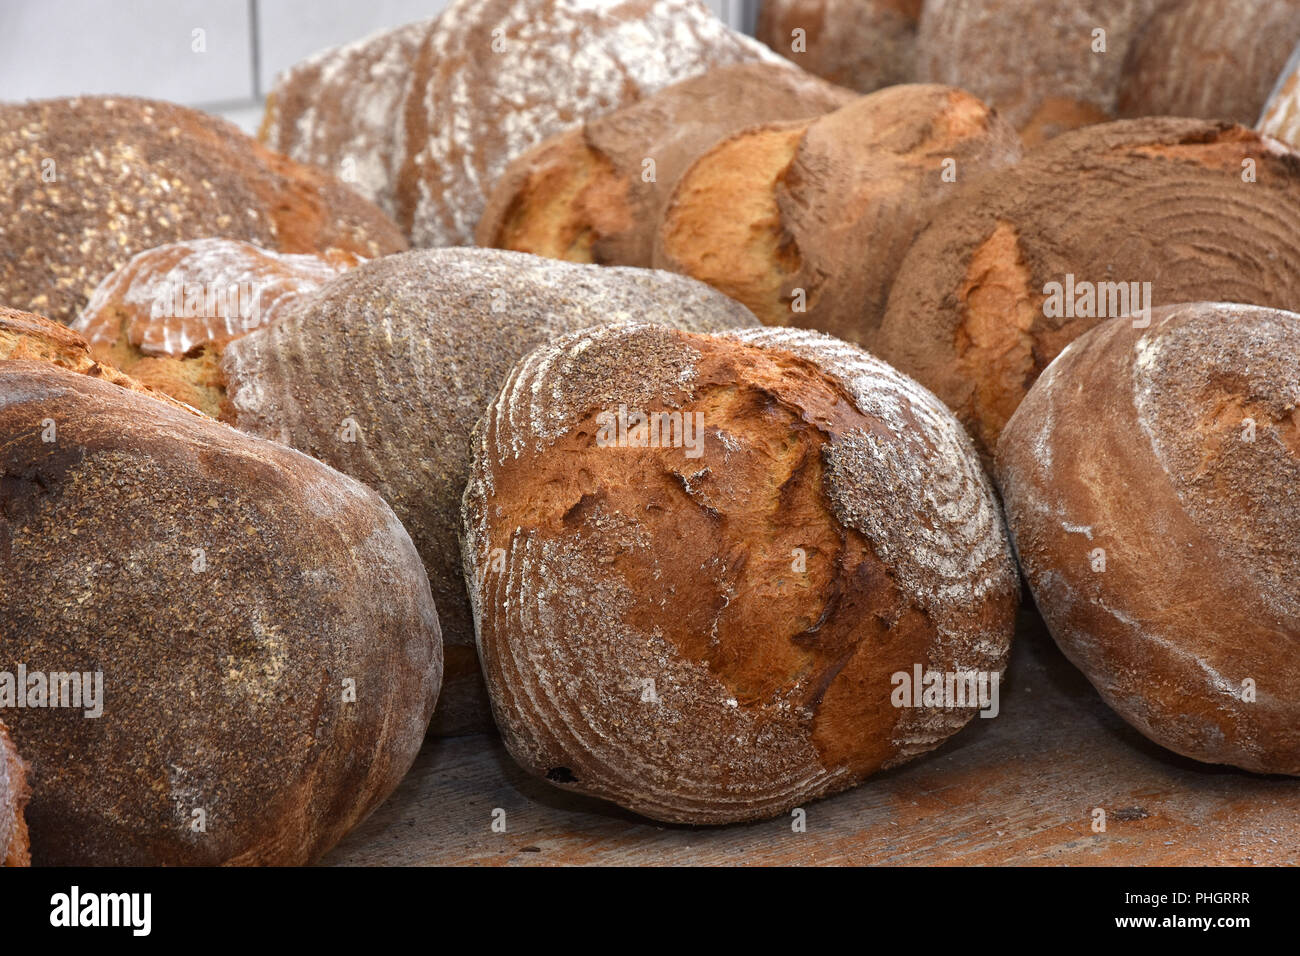 Brot, Brote; Bauernbrot; Stockfoto